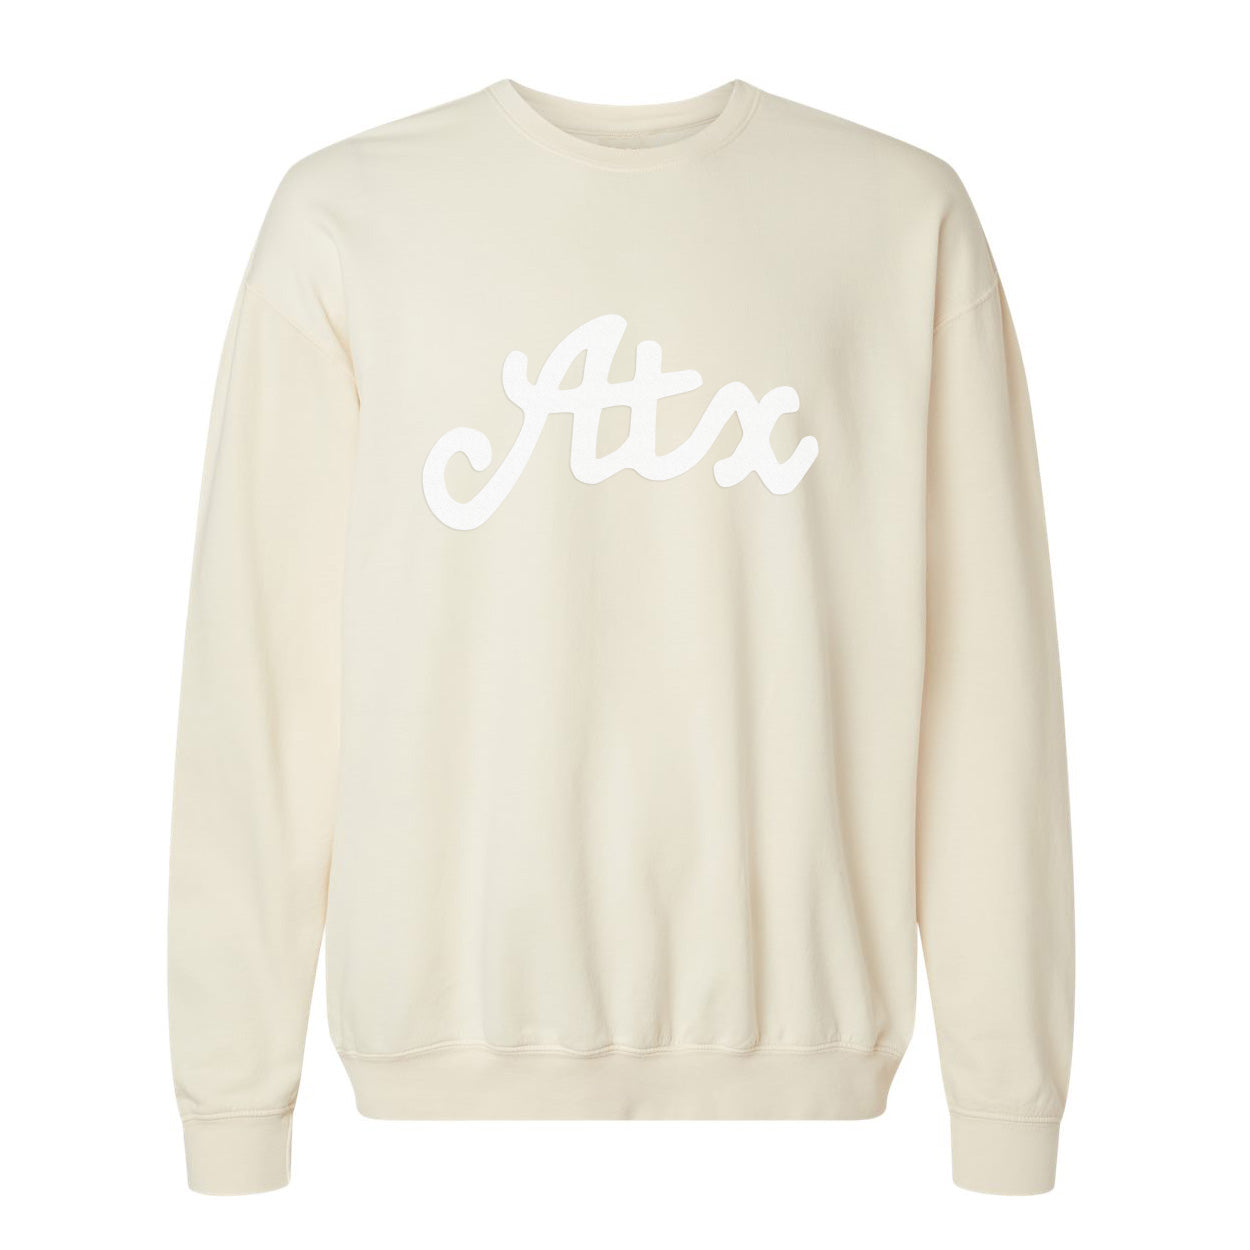 Atx Cursive Washed Sweatshirt